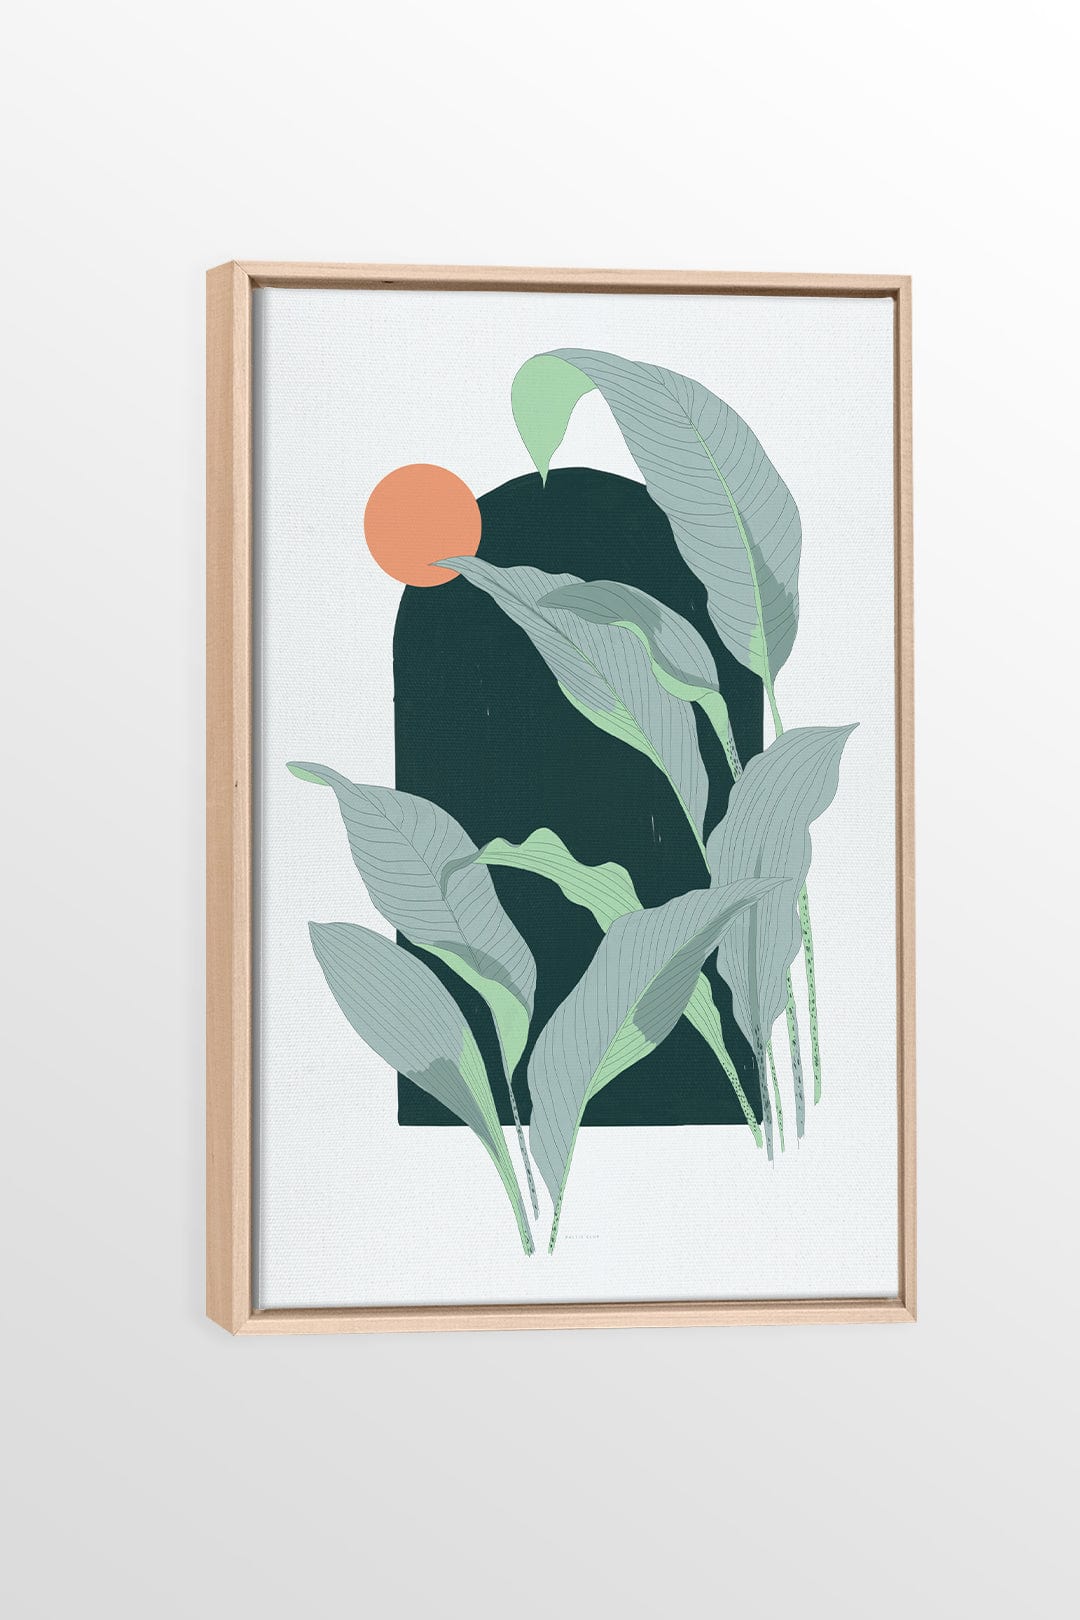 Arcade (Leafy) - Printed illustration on canvas